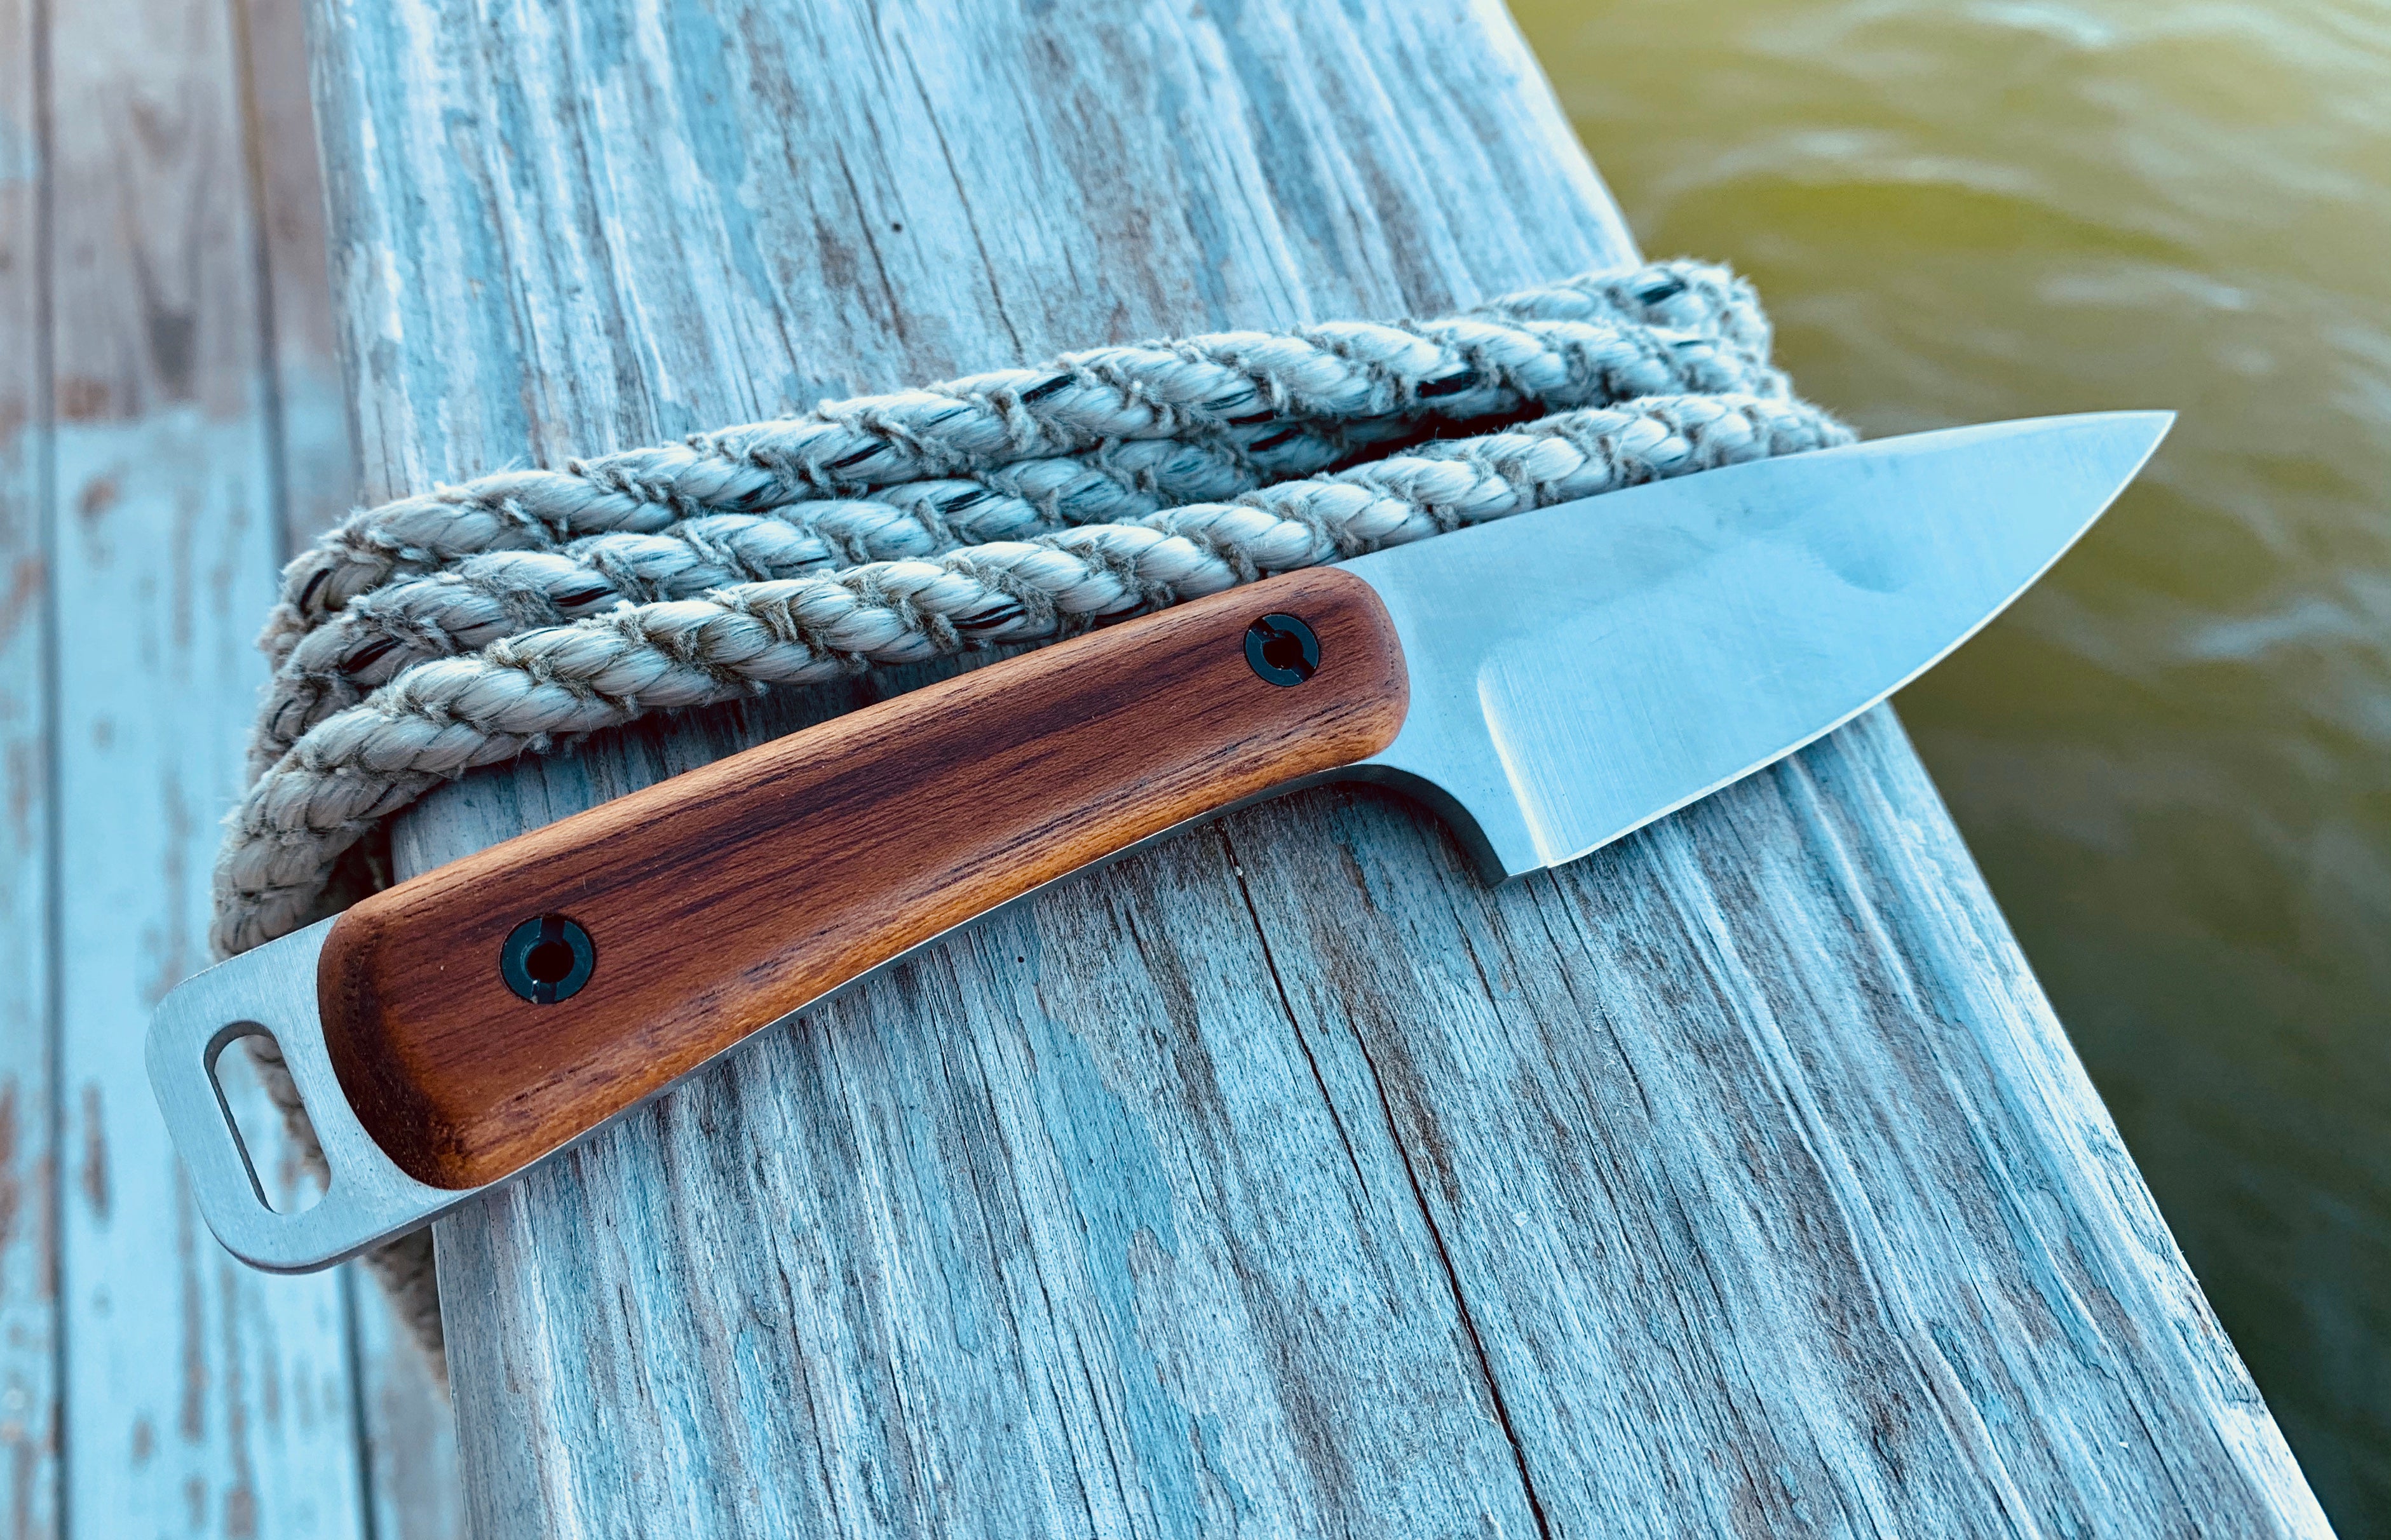 Parker River Boat Knife 3.75’ (Rustproof, Made in USA)